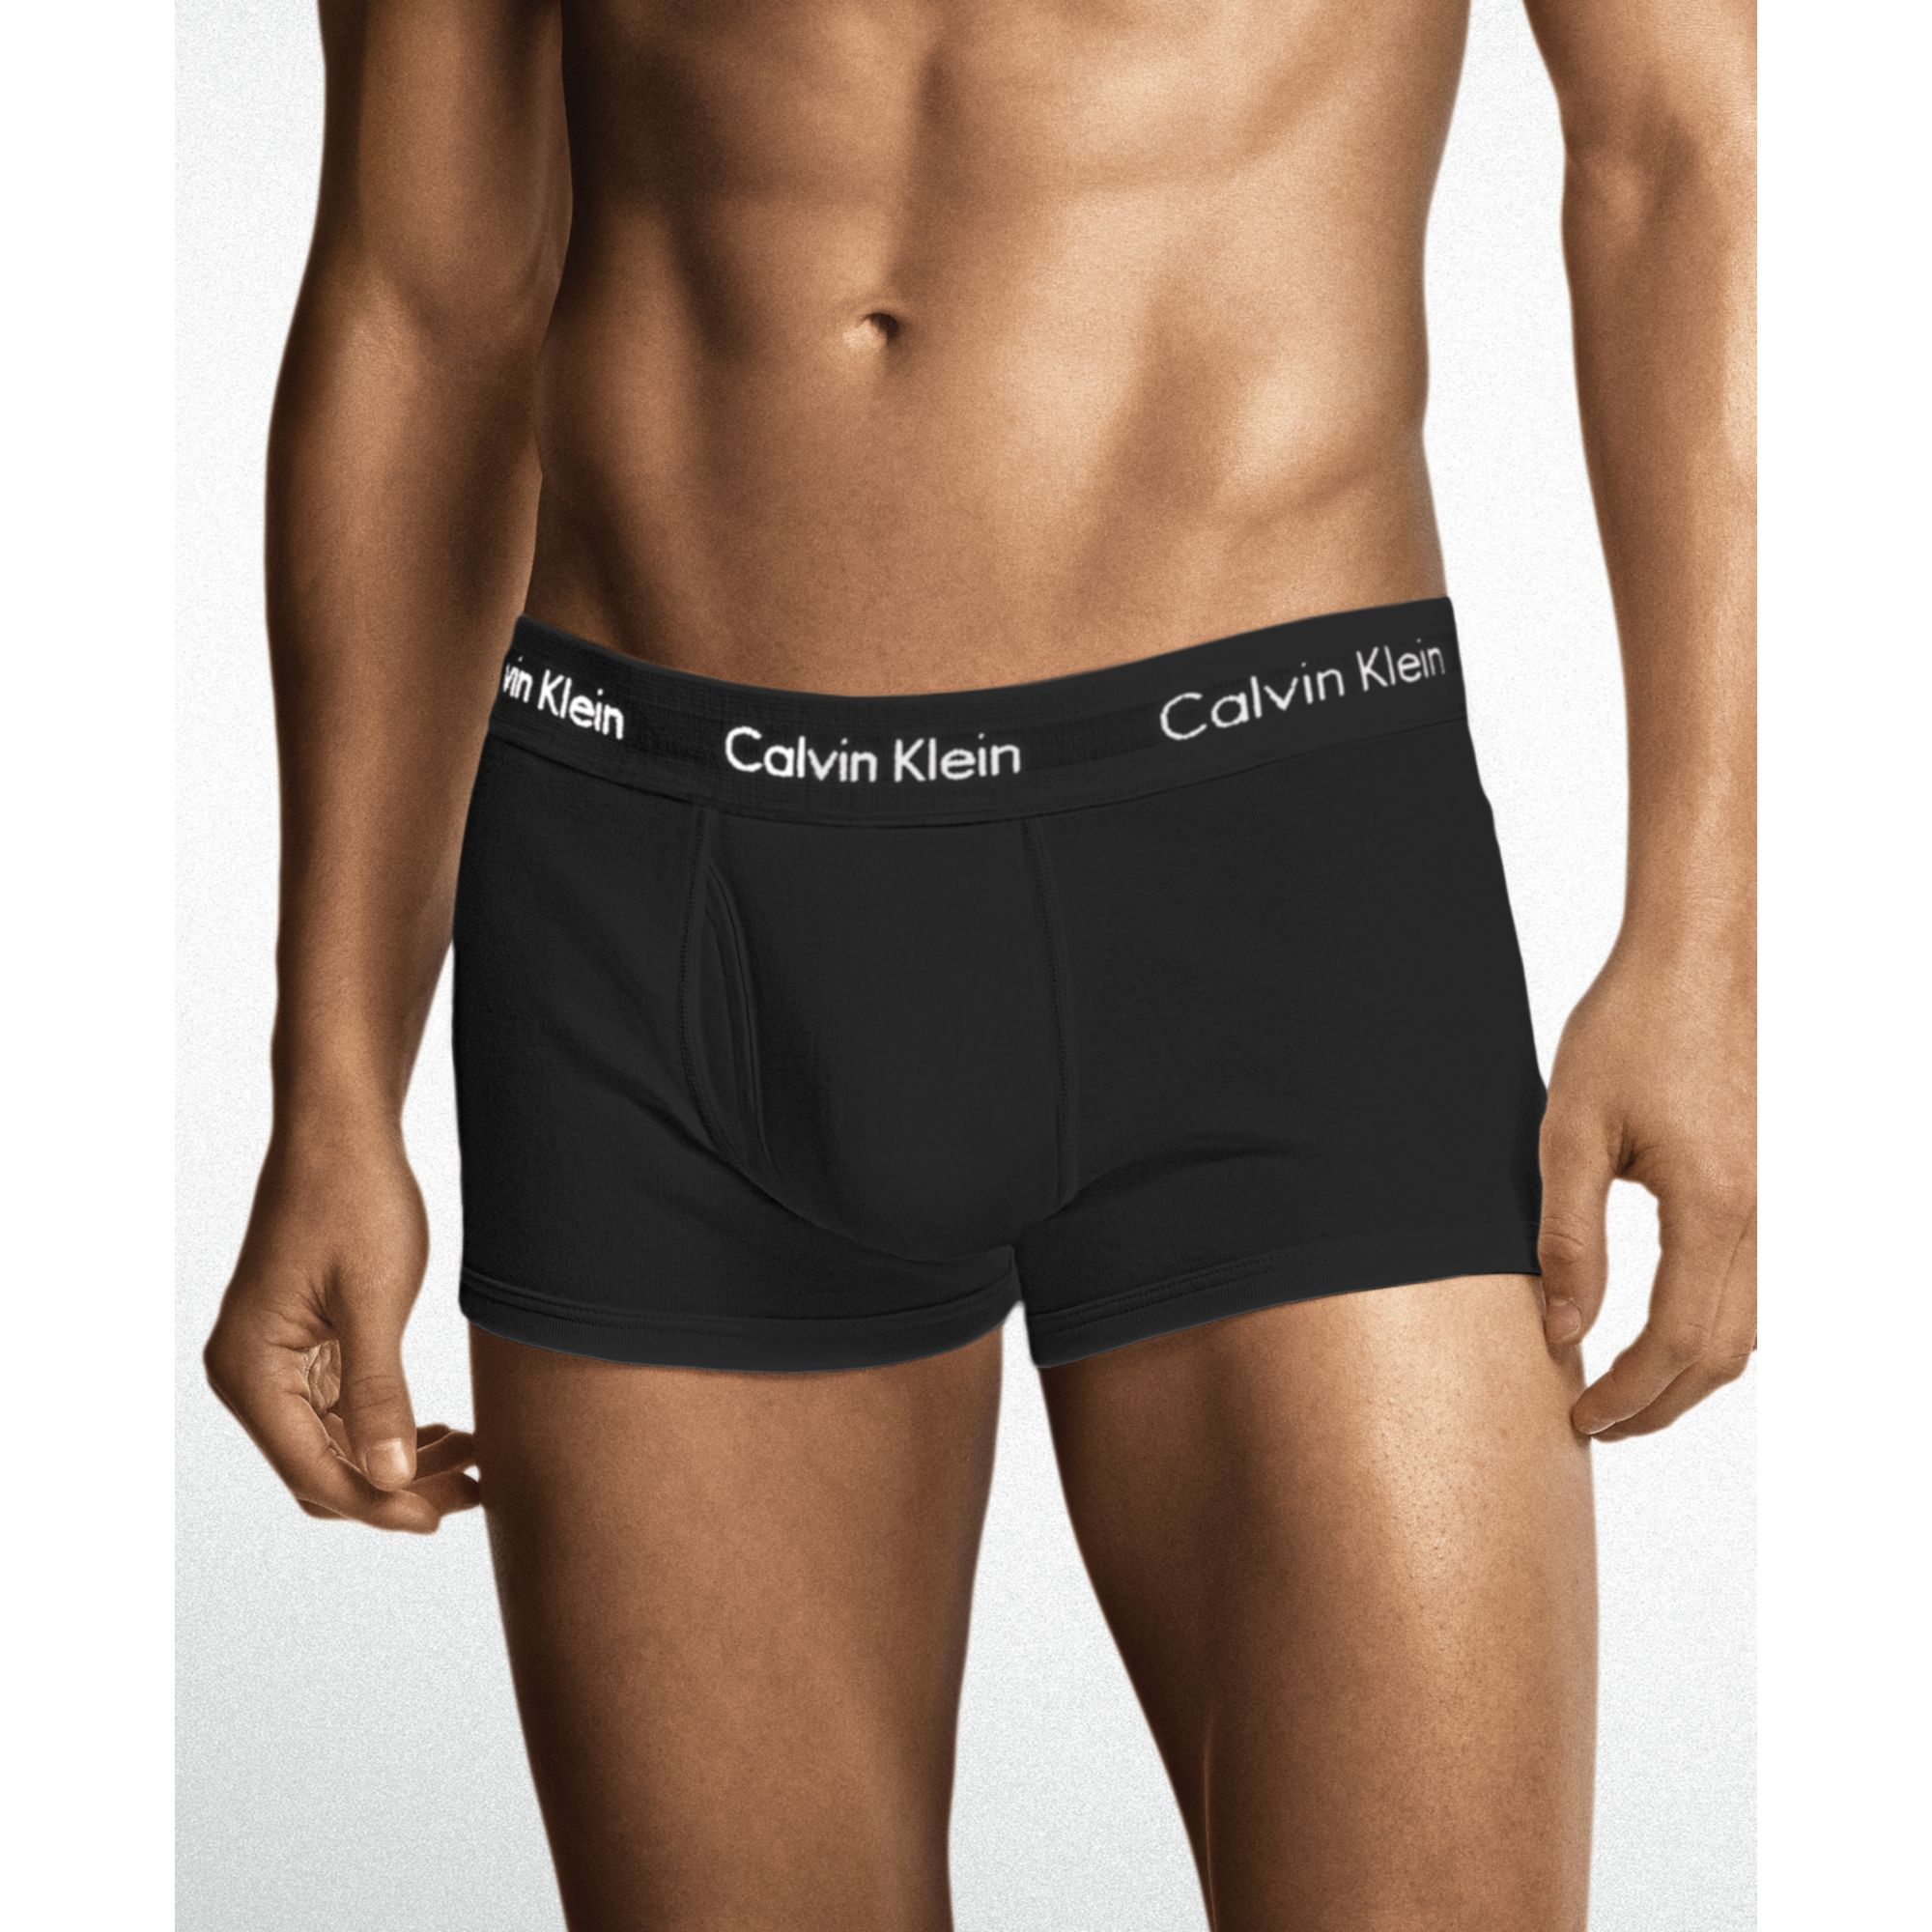 Lyst - Calvin Klein Cotton Stretch Trunk 2 Pack in Black for Men